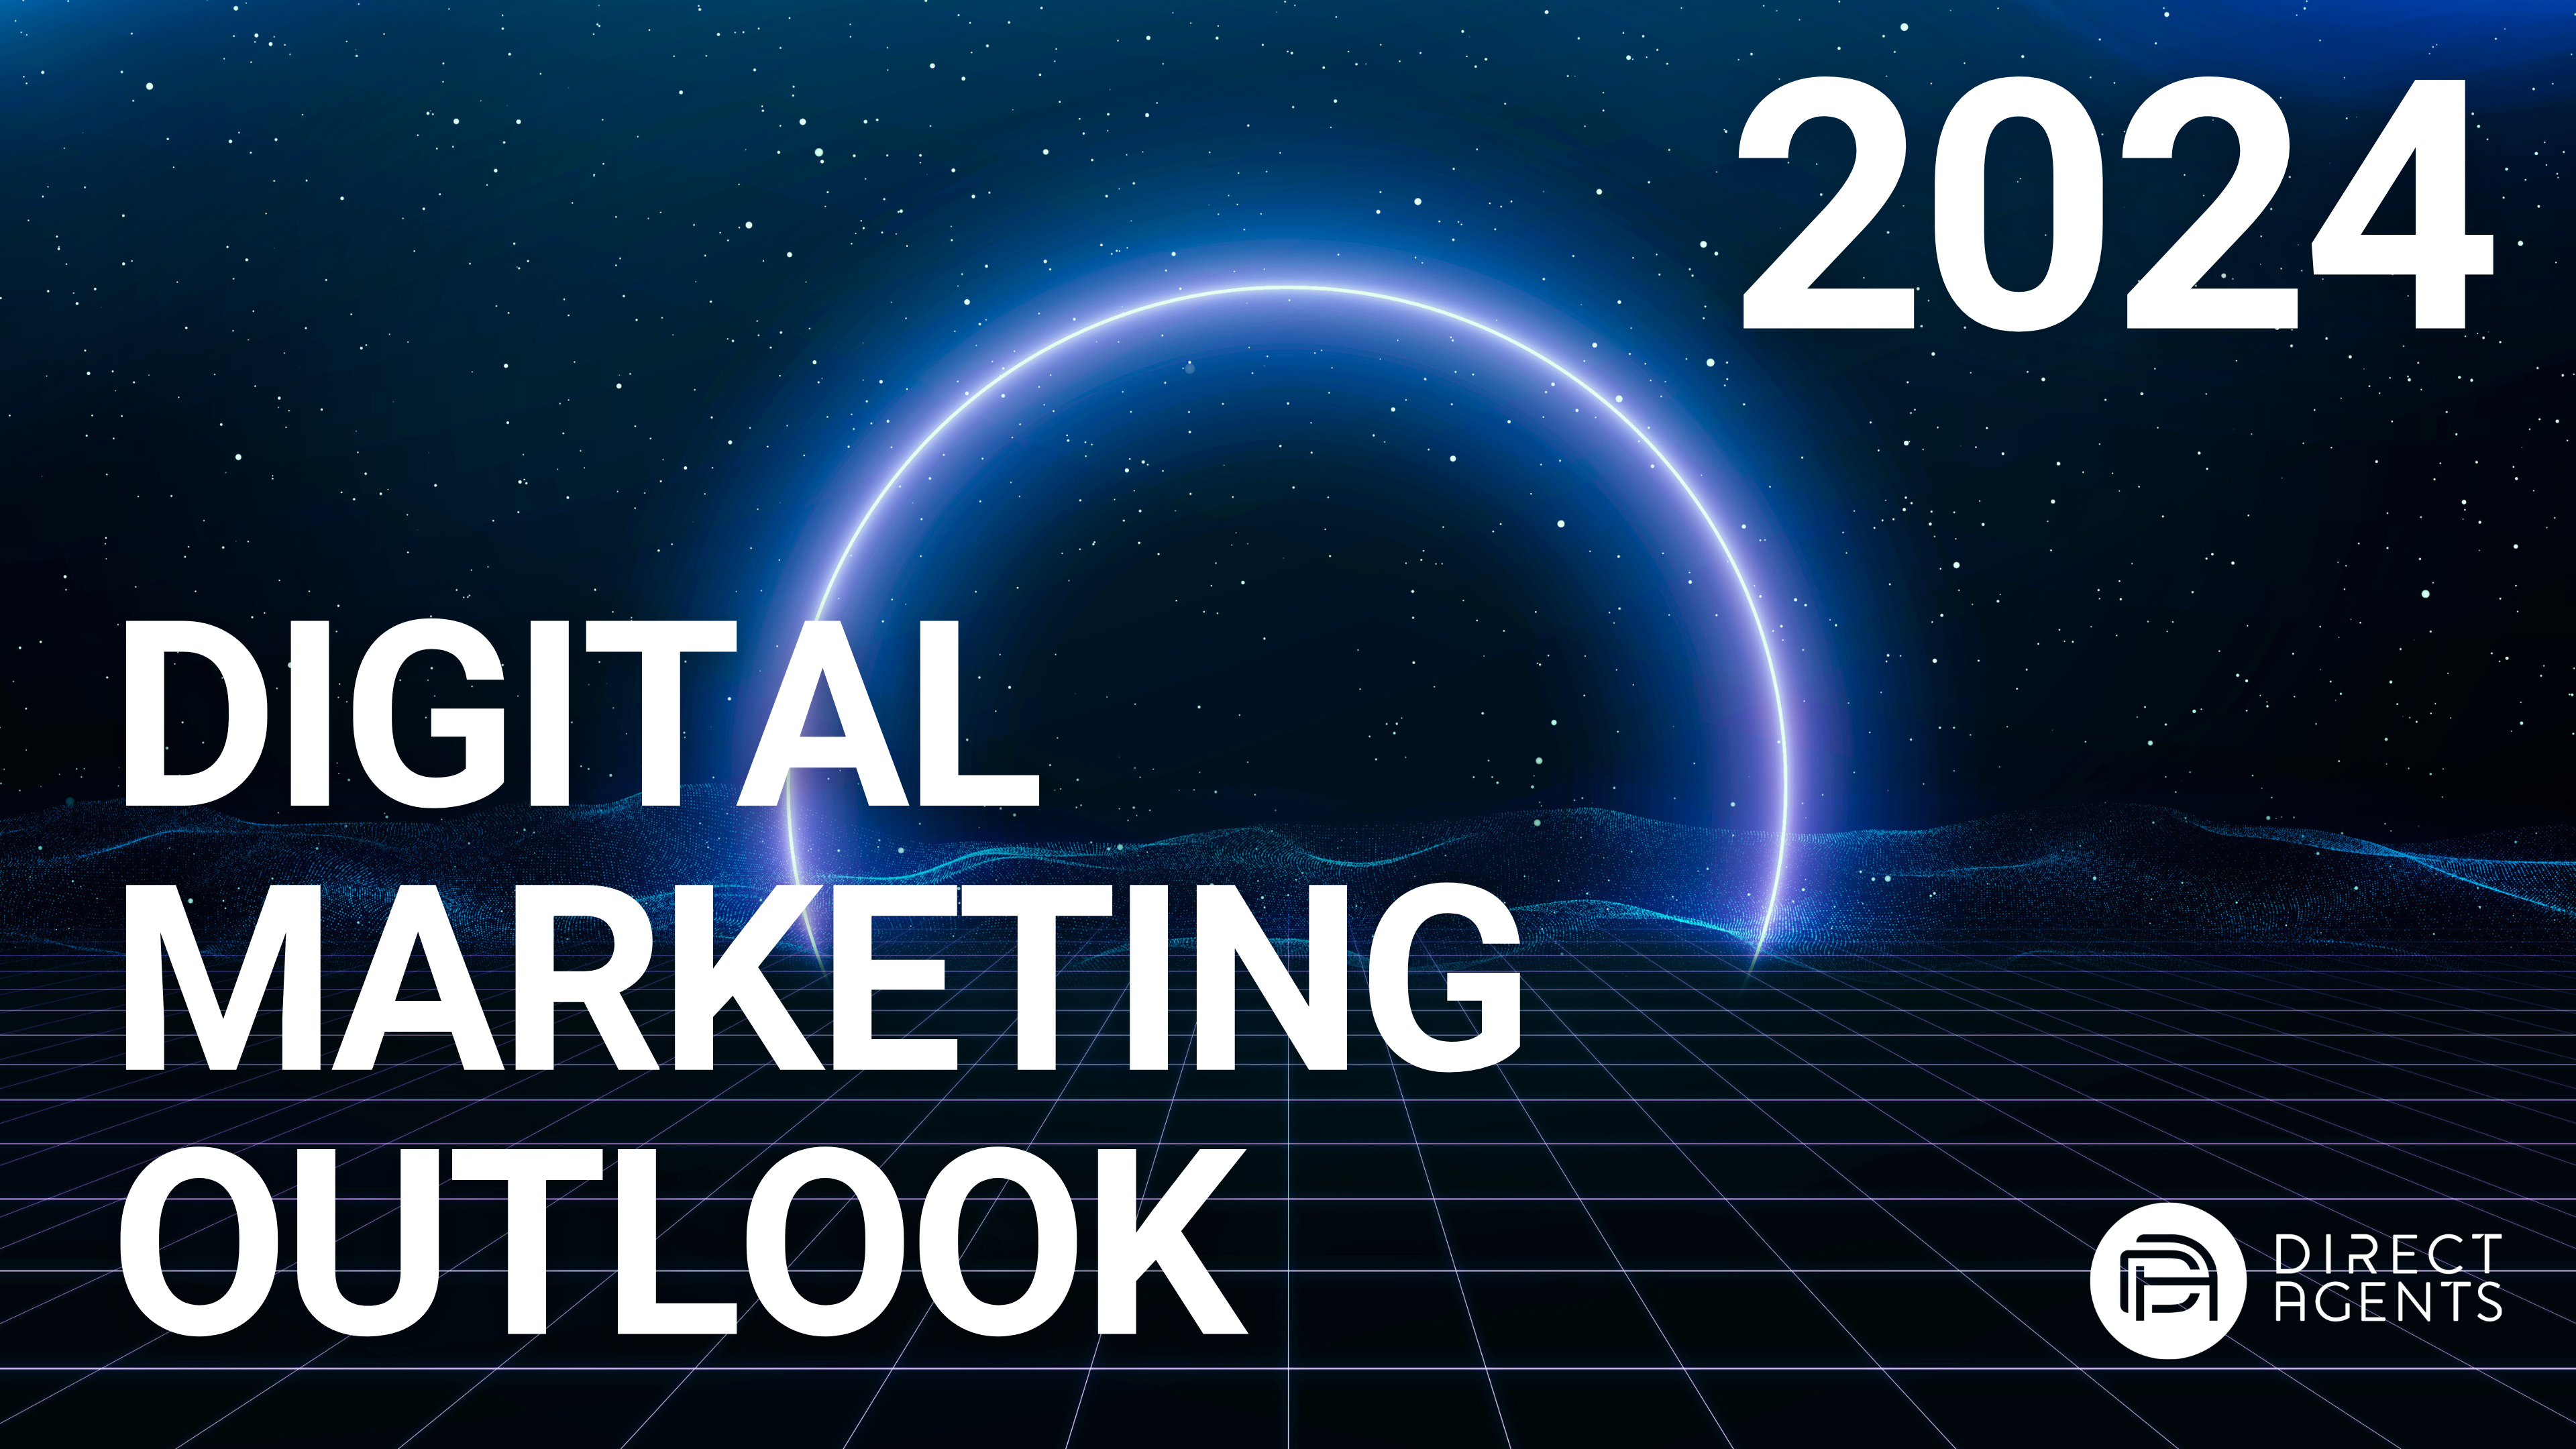 Digital Marketing Outlook for 2024